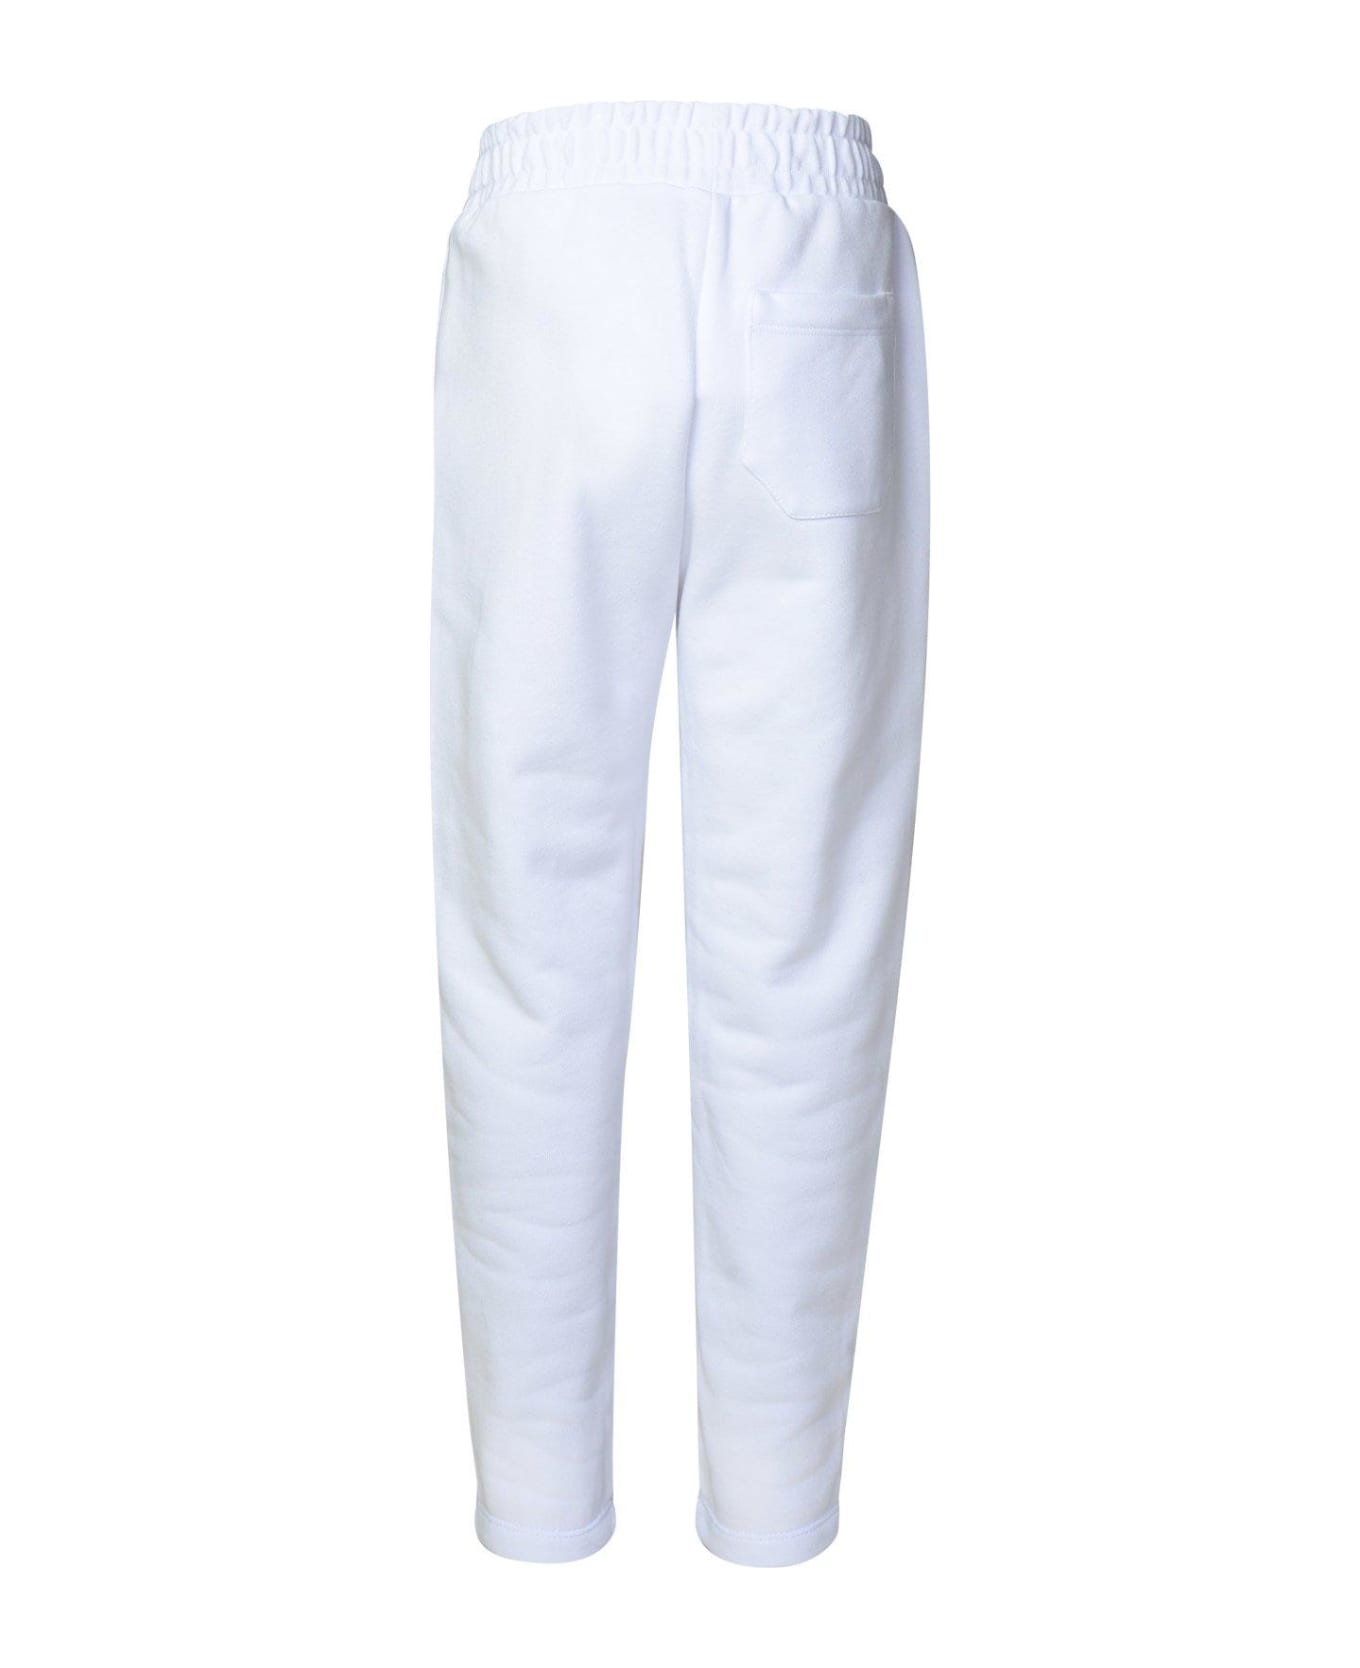 Golden Goose Star-printed Tapered-leg Track Pants - WHITE/ BLUE ROYAL